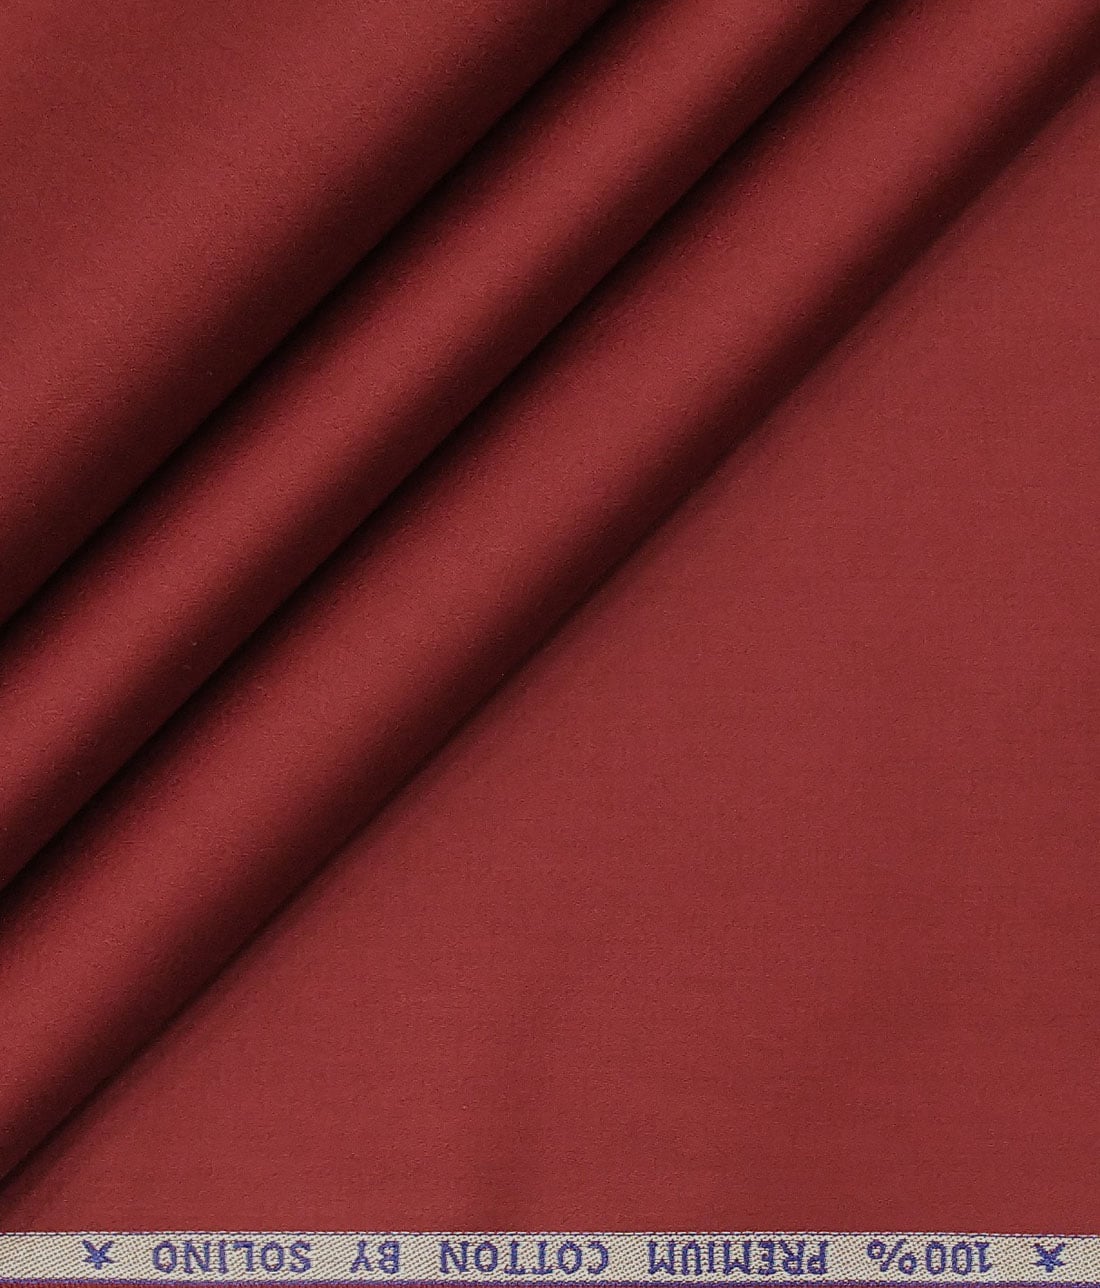 Solino 100% Premium Cotton Maroon Red Solid Satin Shirt Fabric (1.60 M)